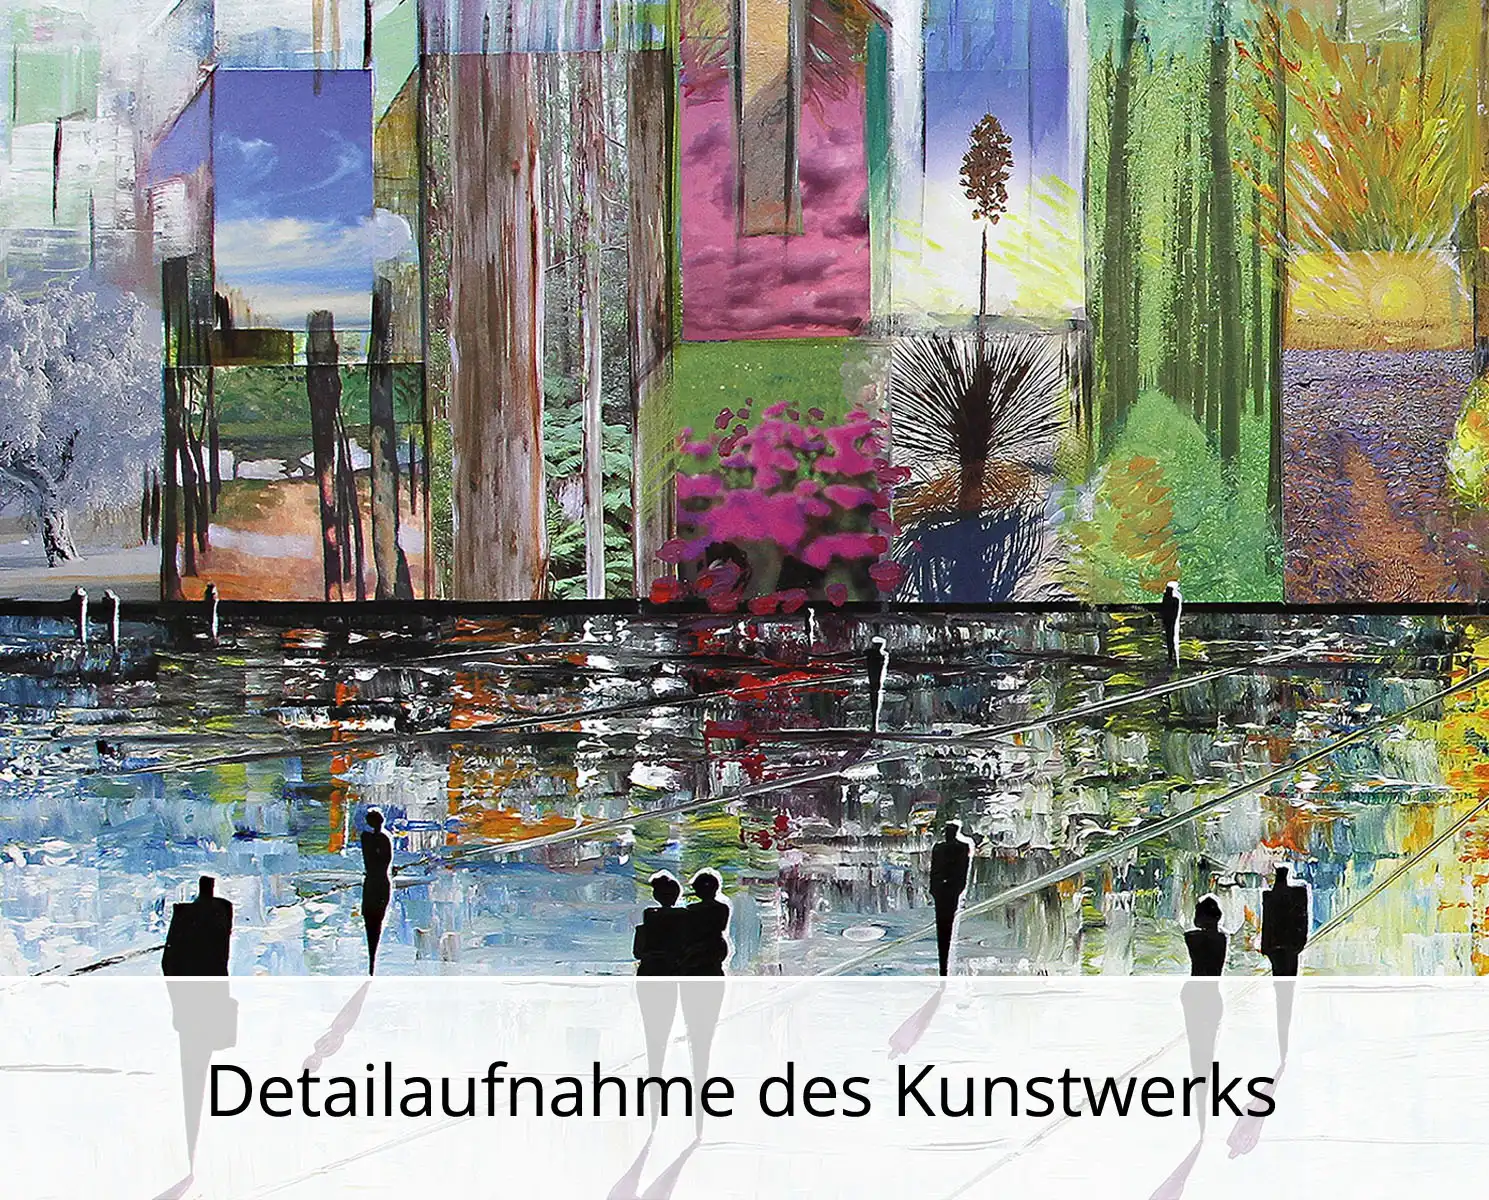 Kunstdruck, signiert: "Naturstadt VI", K. Namazi, Edition, Nr. 1/25